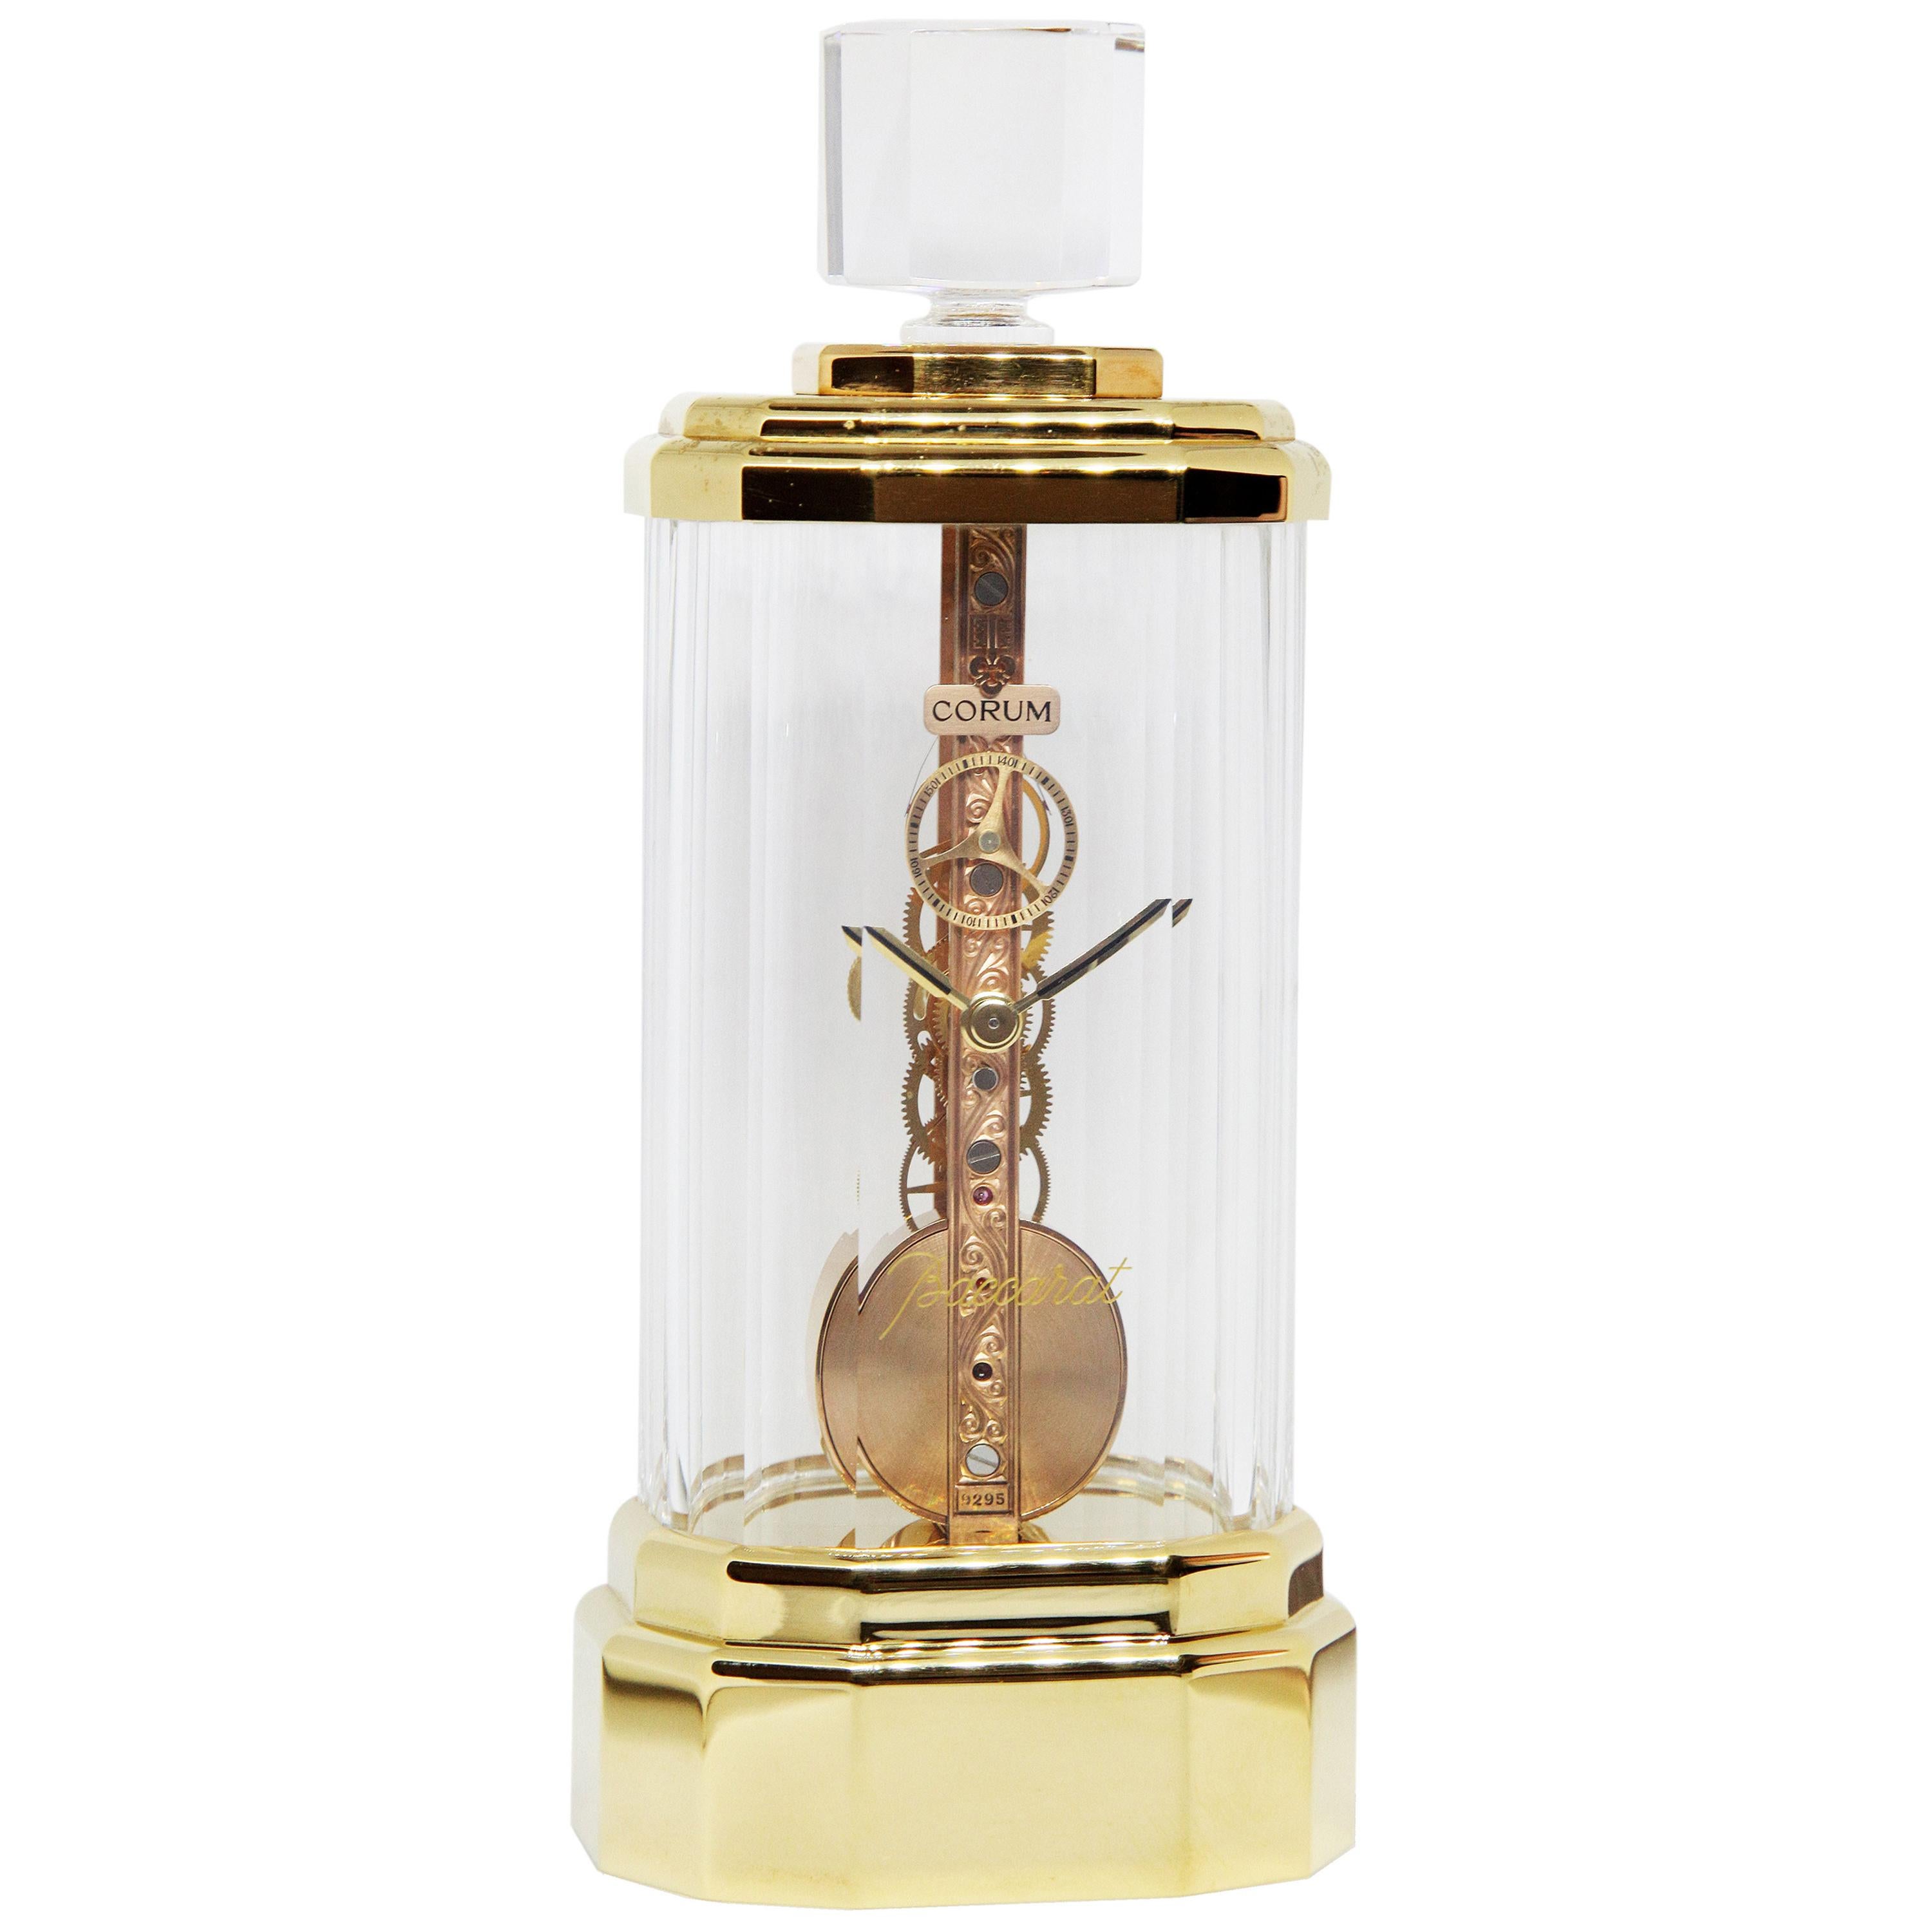 Limited Baccarat x Corum Skeletonized Bridge Perfume Bottle Timepiece Clock 